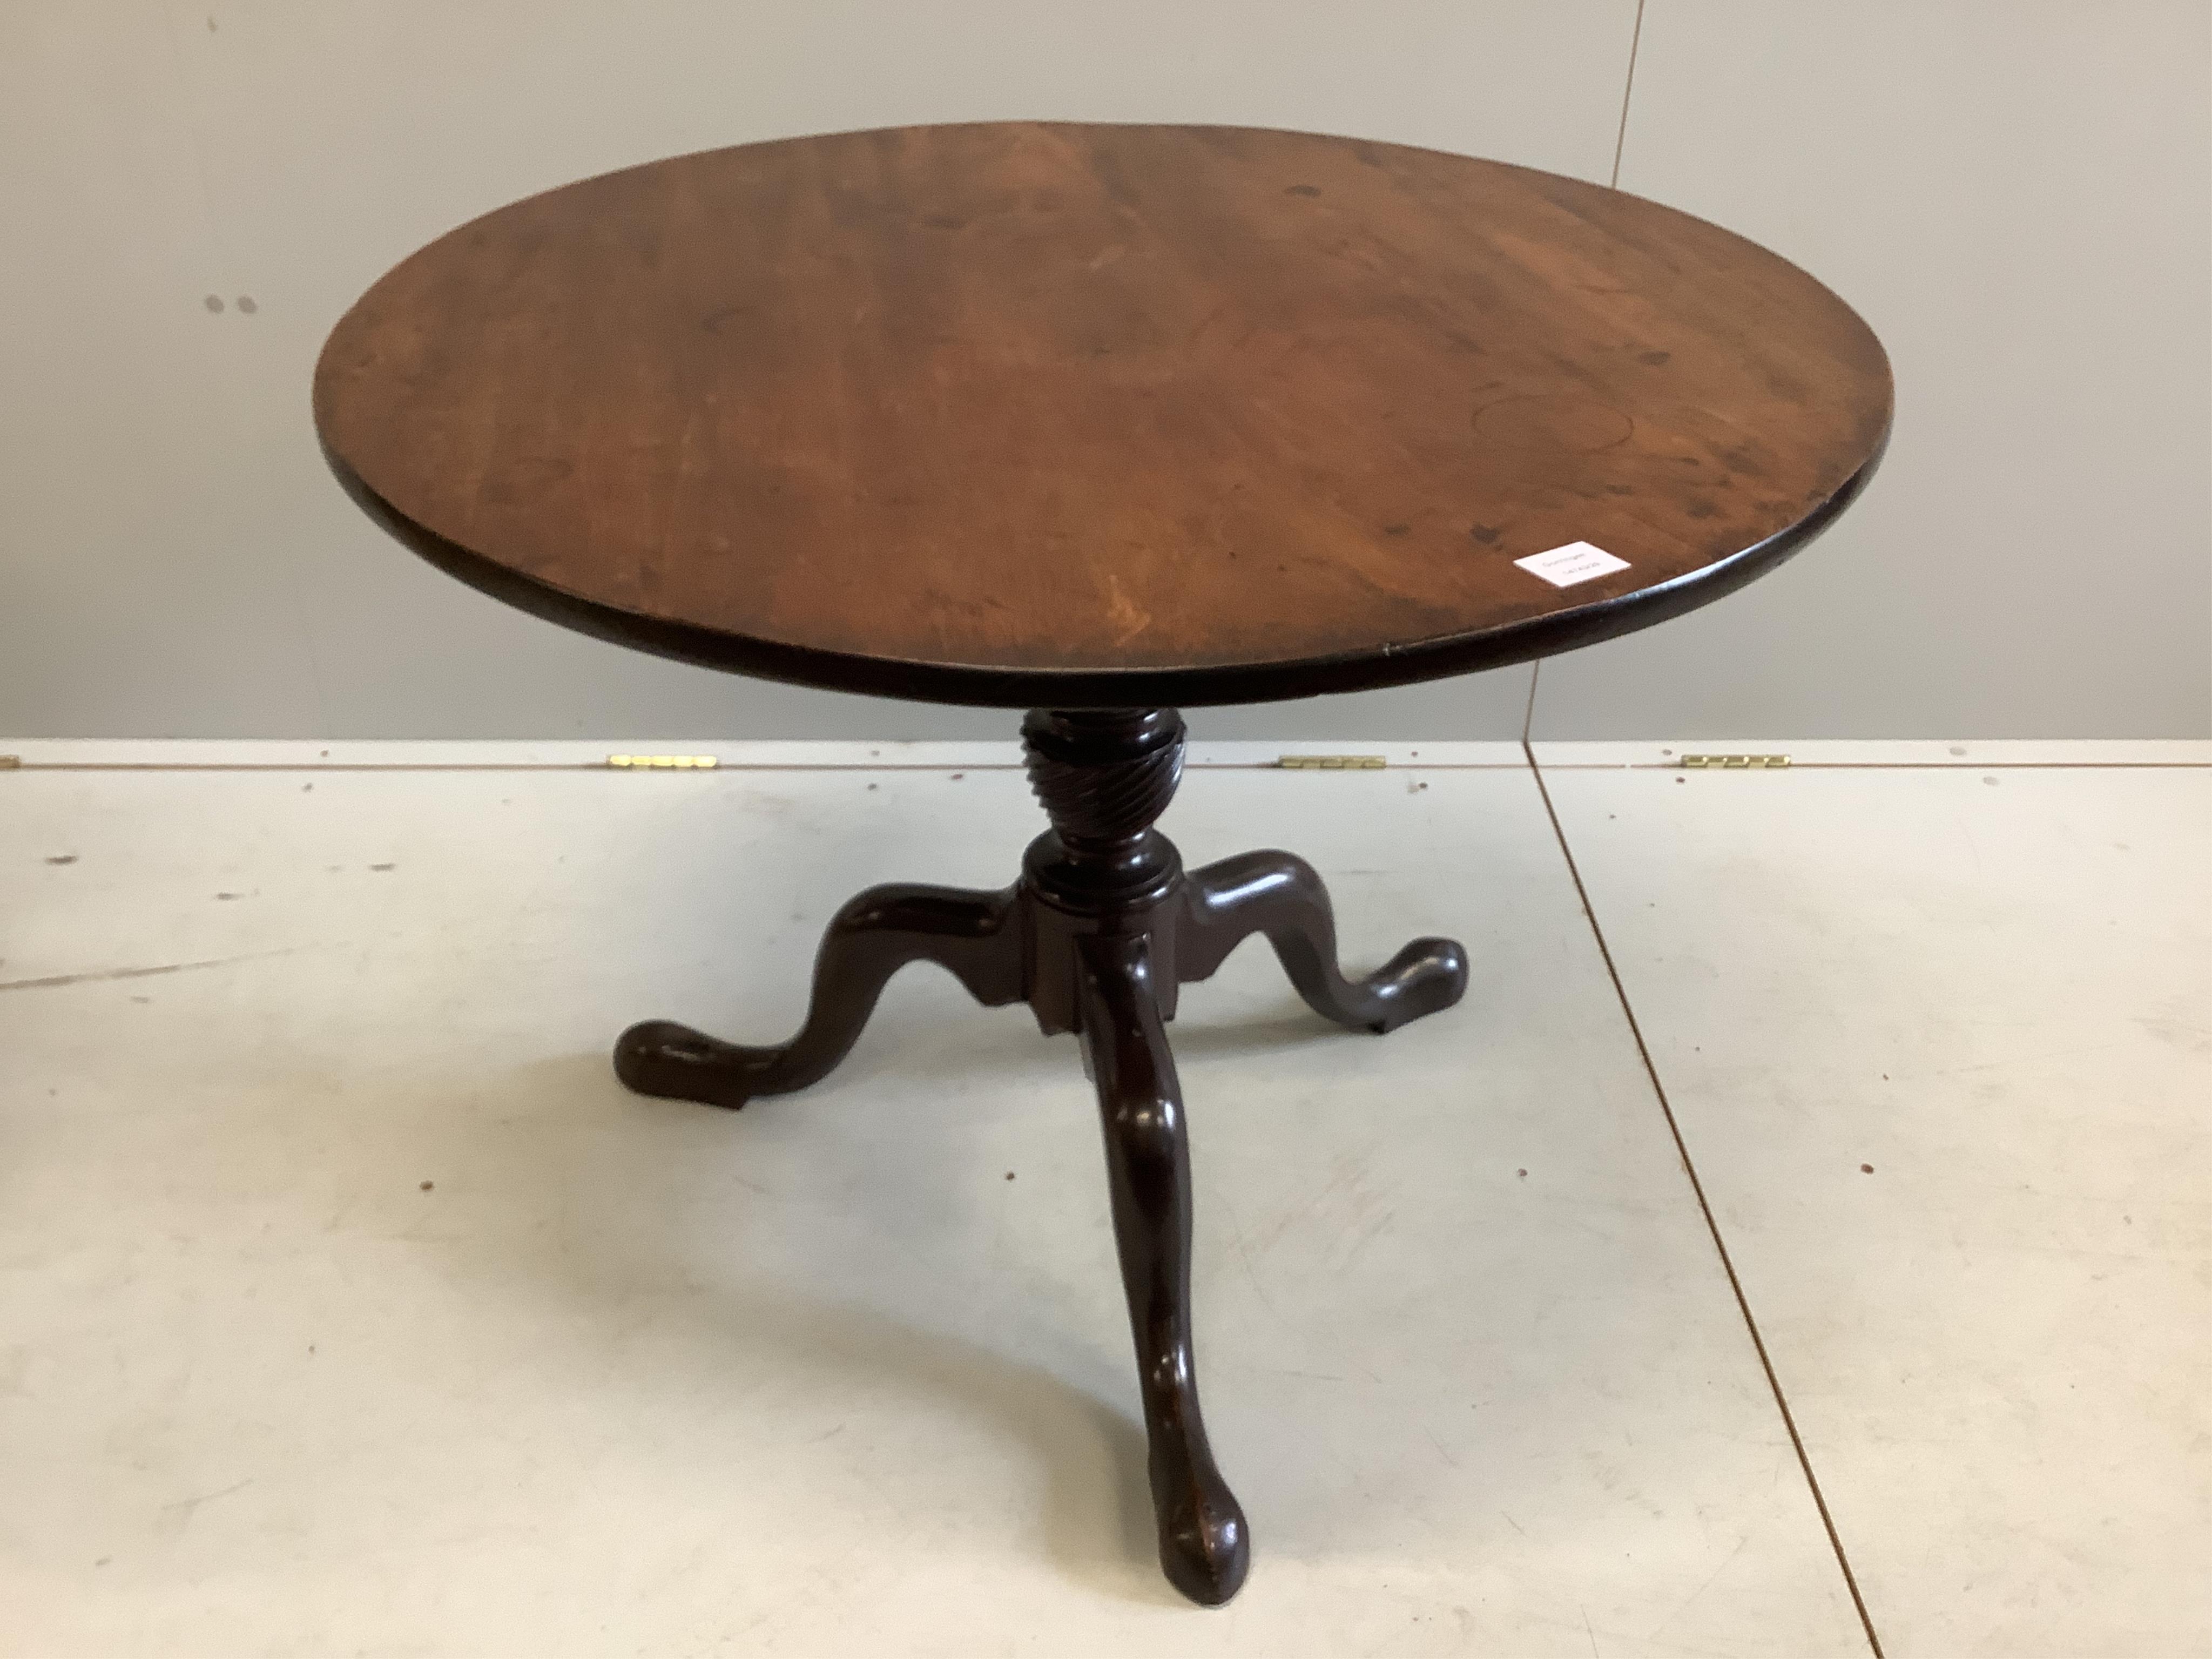 A George III circular mahogany tilt top tripod tea table, diameter 89cm, height 67cm. Condition - fair